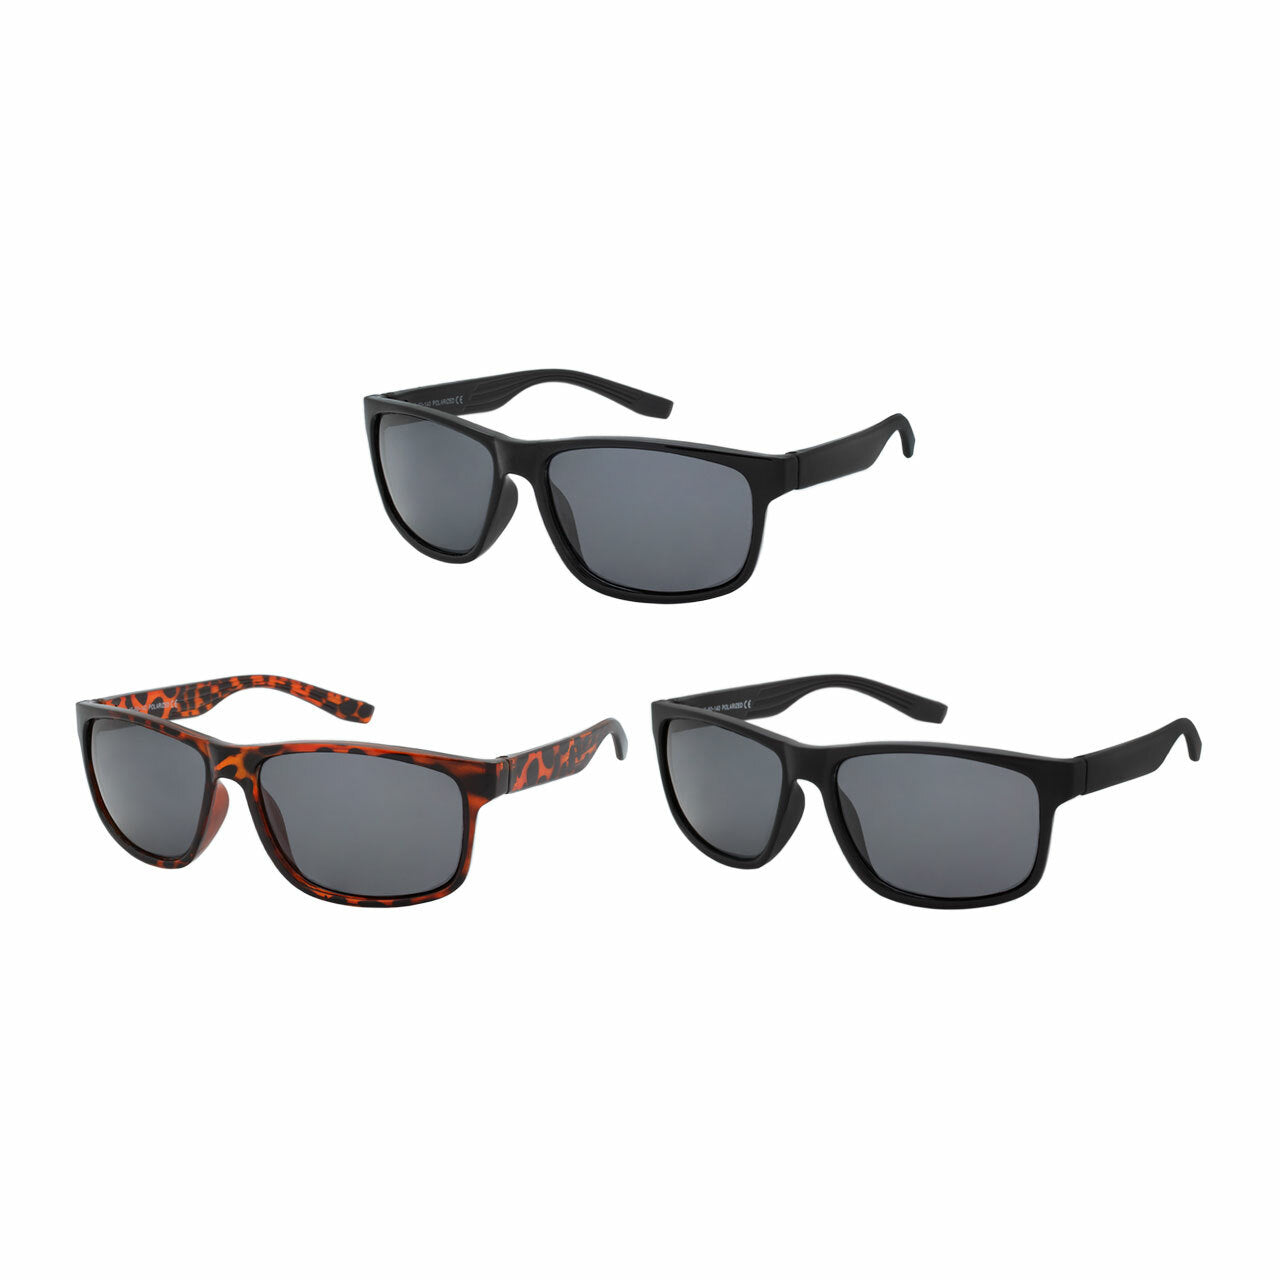 Assorted Colors Polycarbonate Polarized Sport Sunglasses Men (Pack